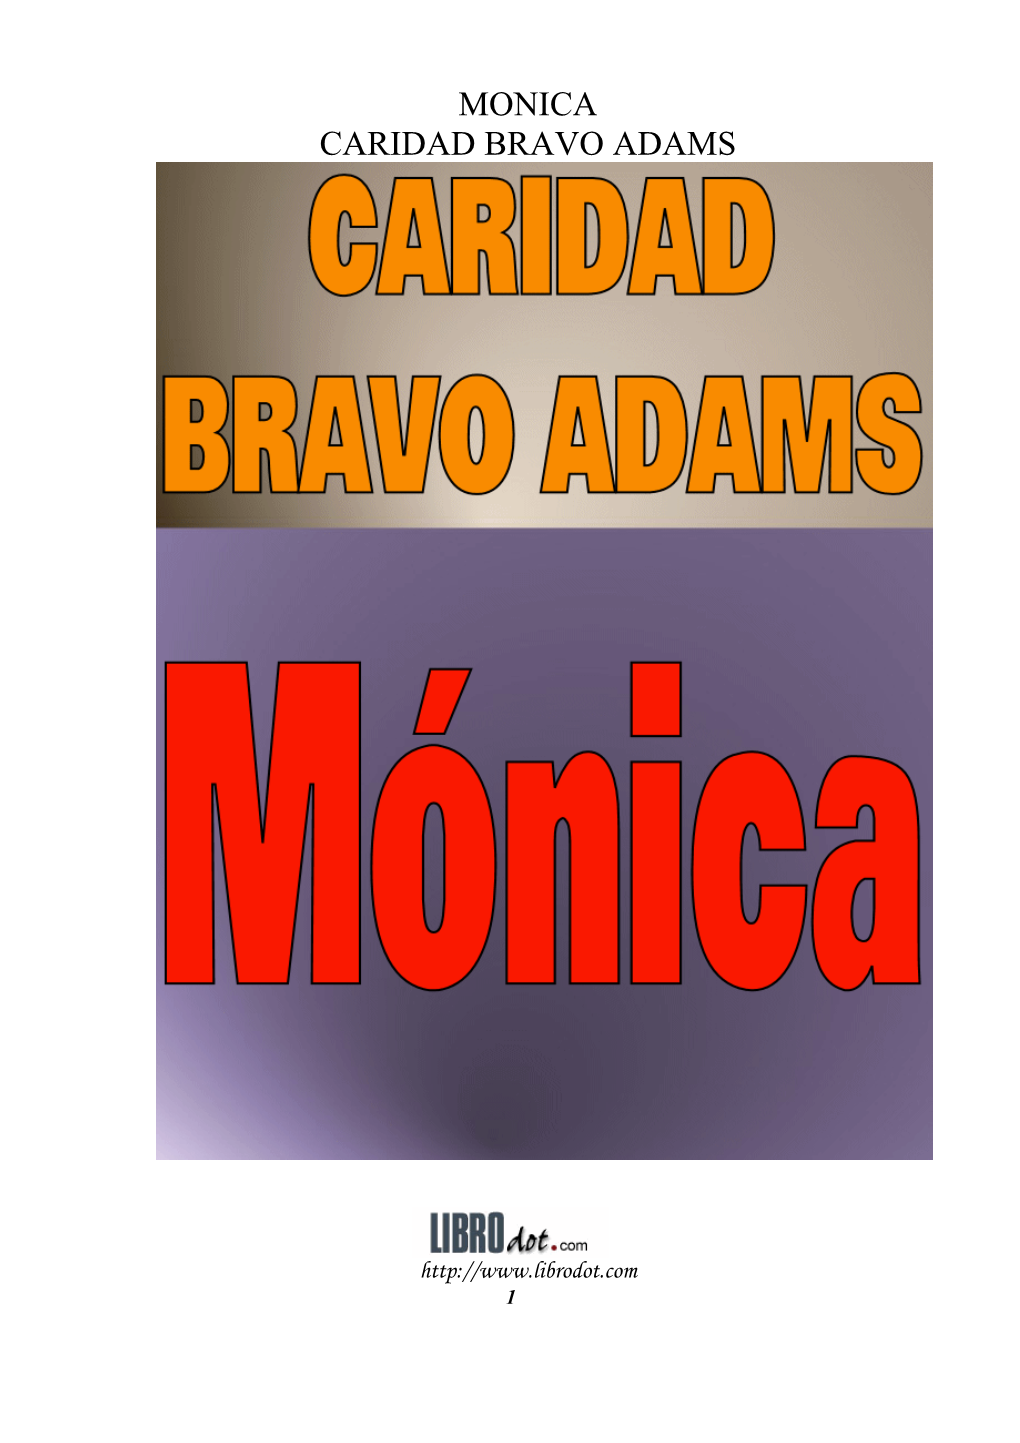 Monica Caridad Bravo Adams